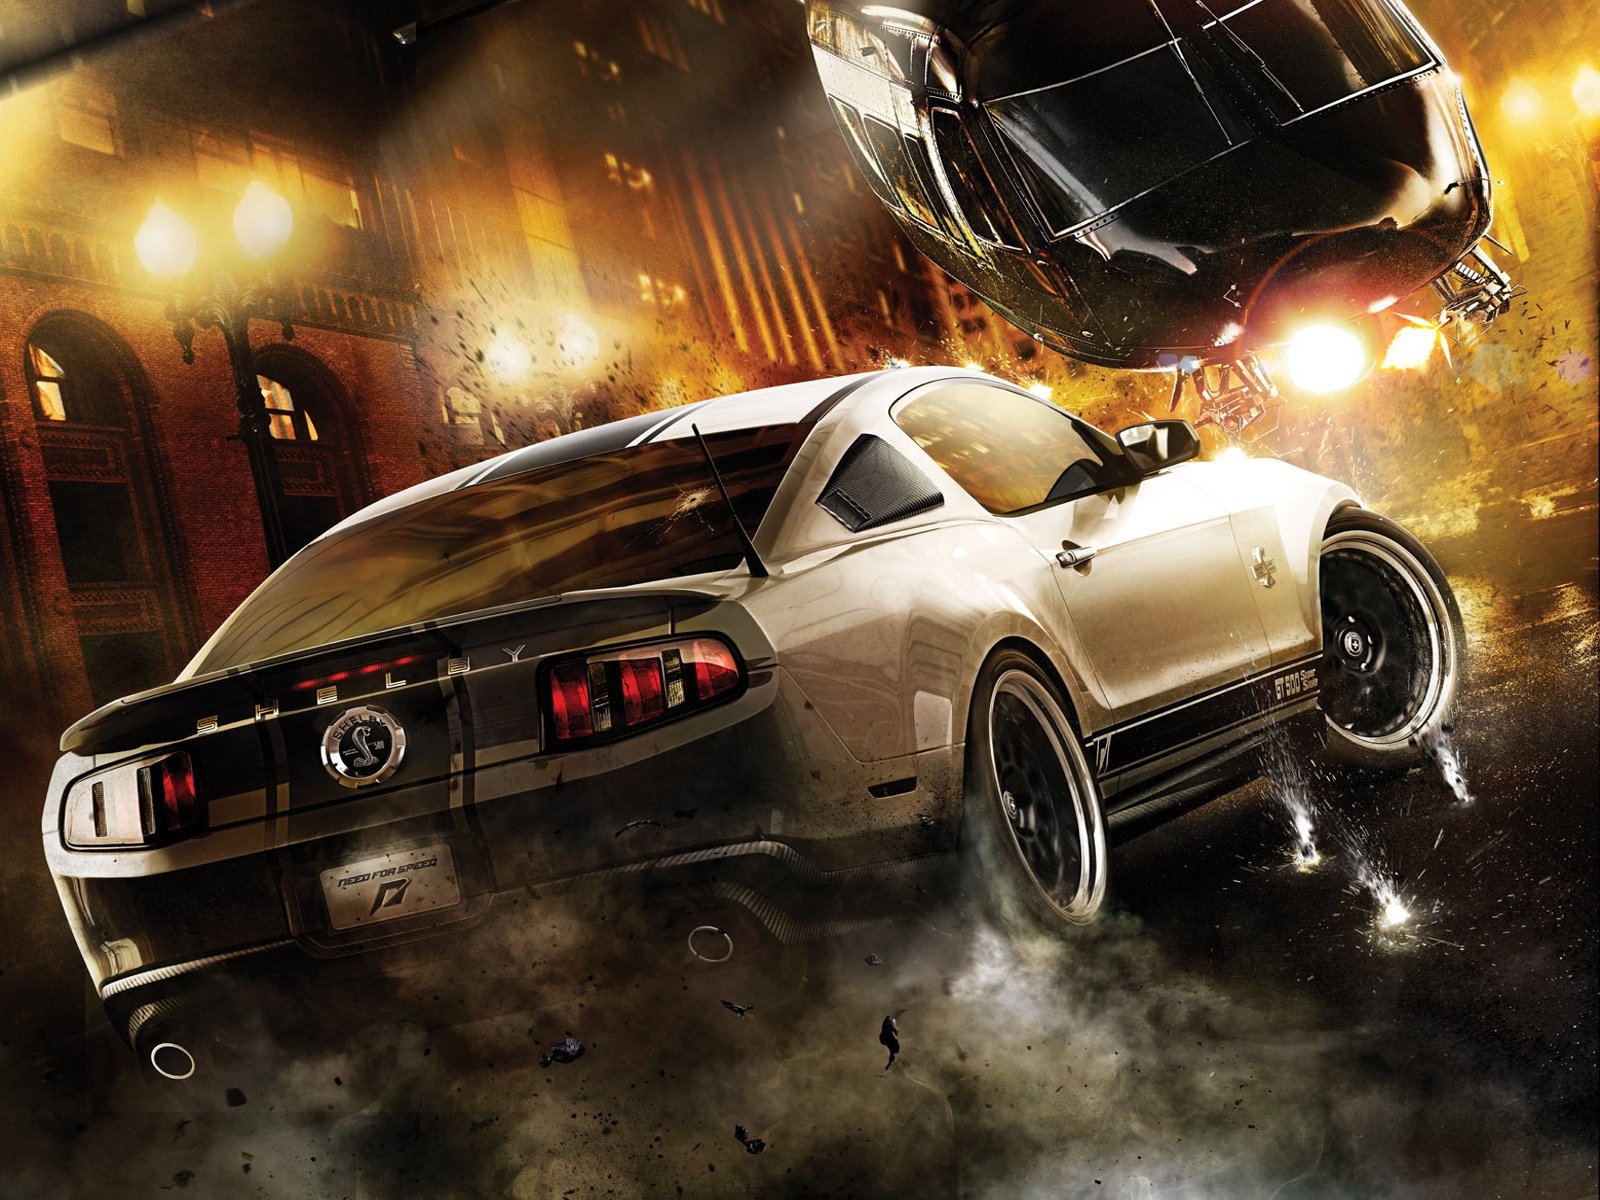 73+] Need For Speed Wallpaper - WallpaperSafari